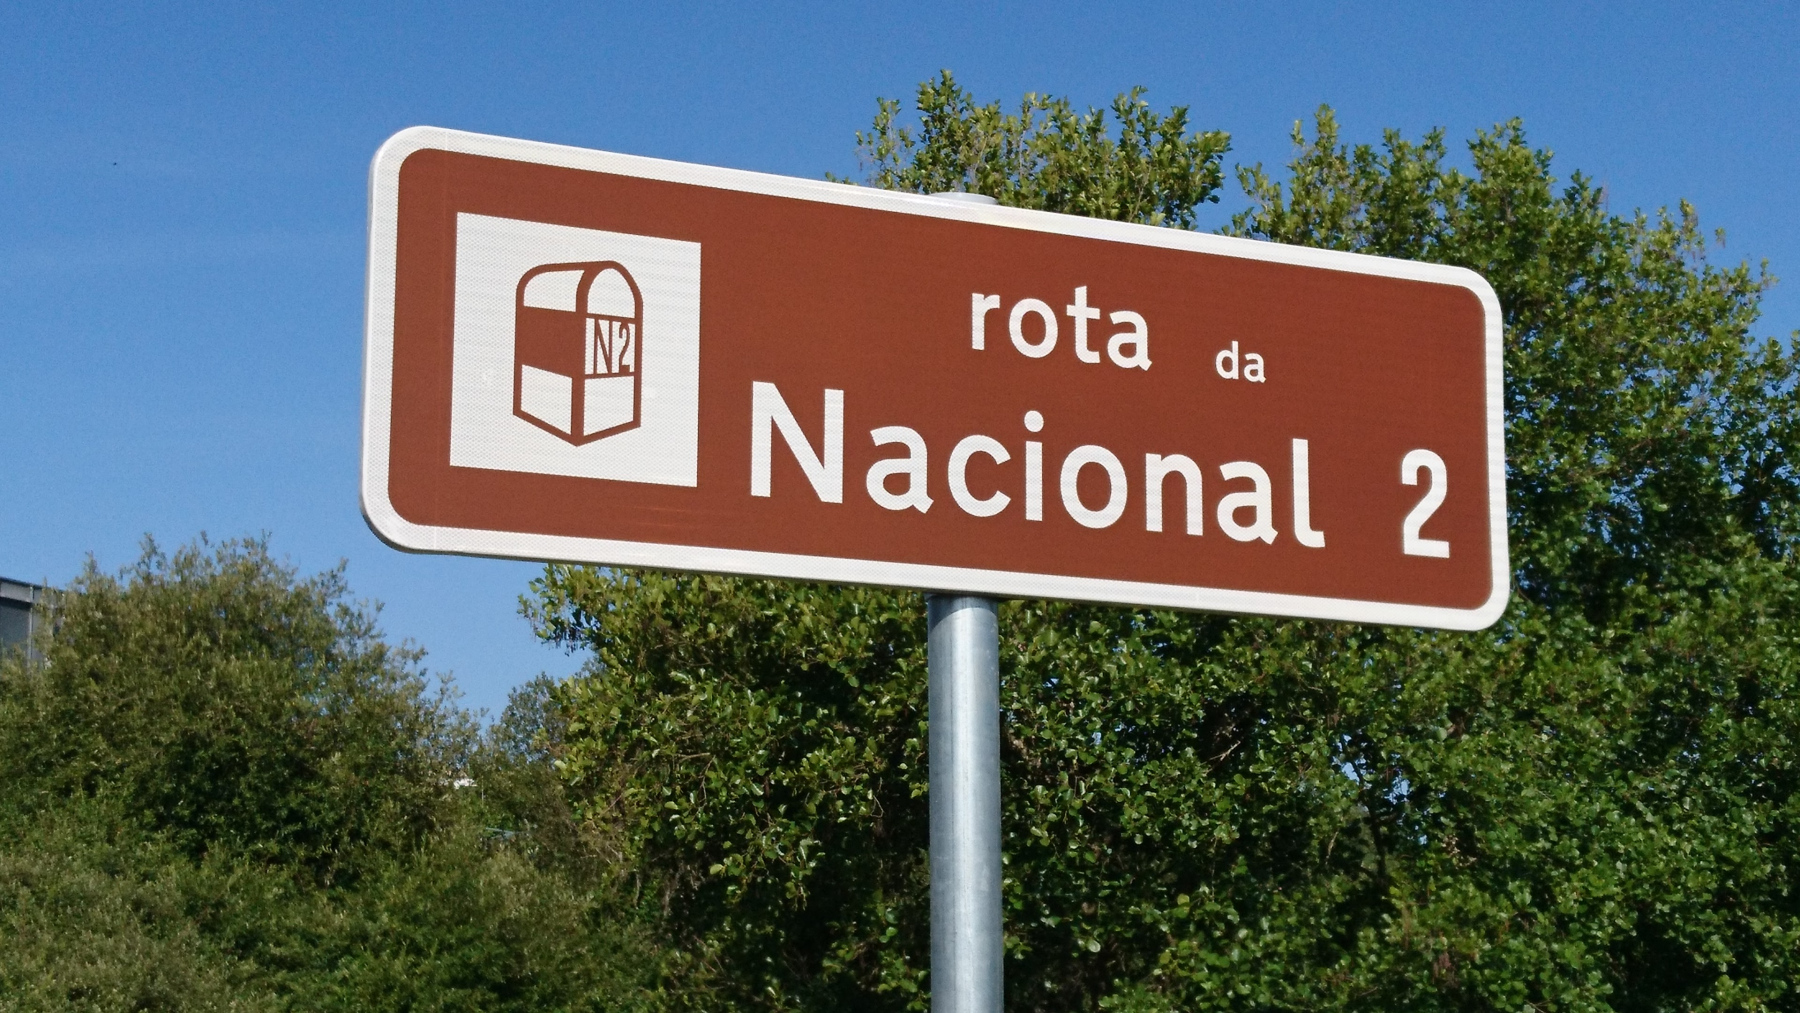 Estrada Nacional 2